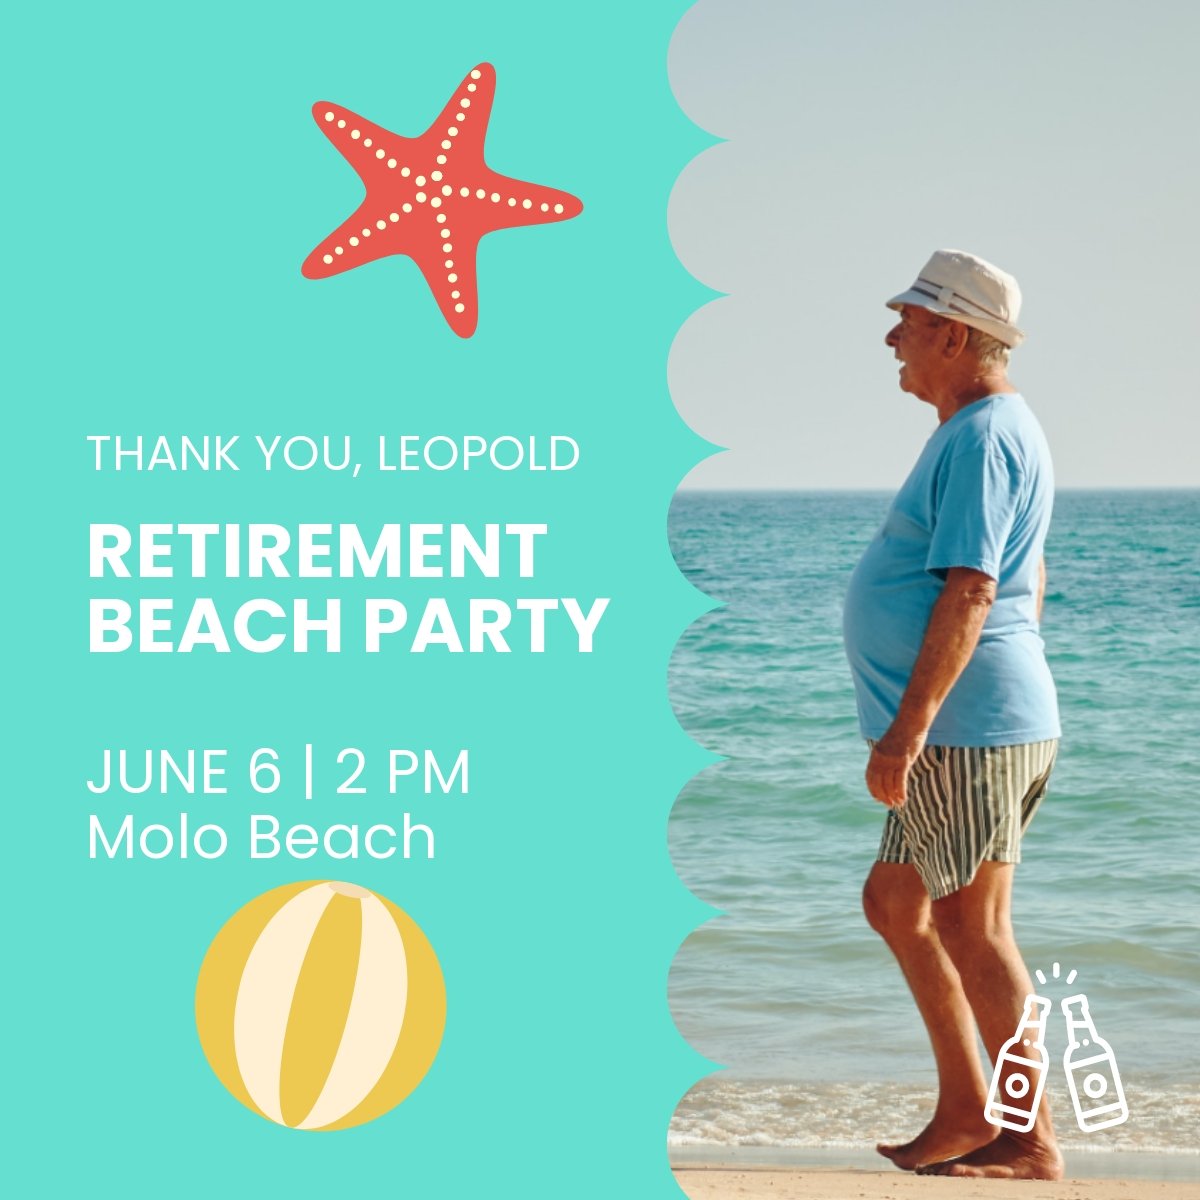 Retirement Beach Party Linkedin Post Template